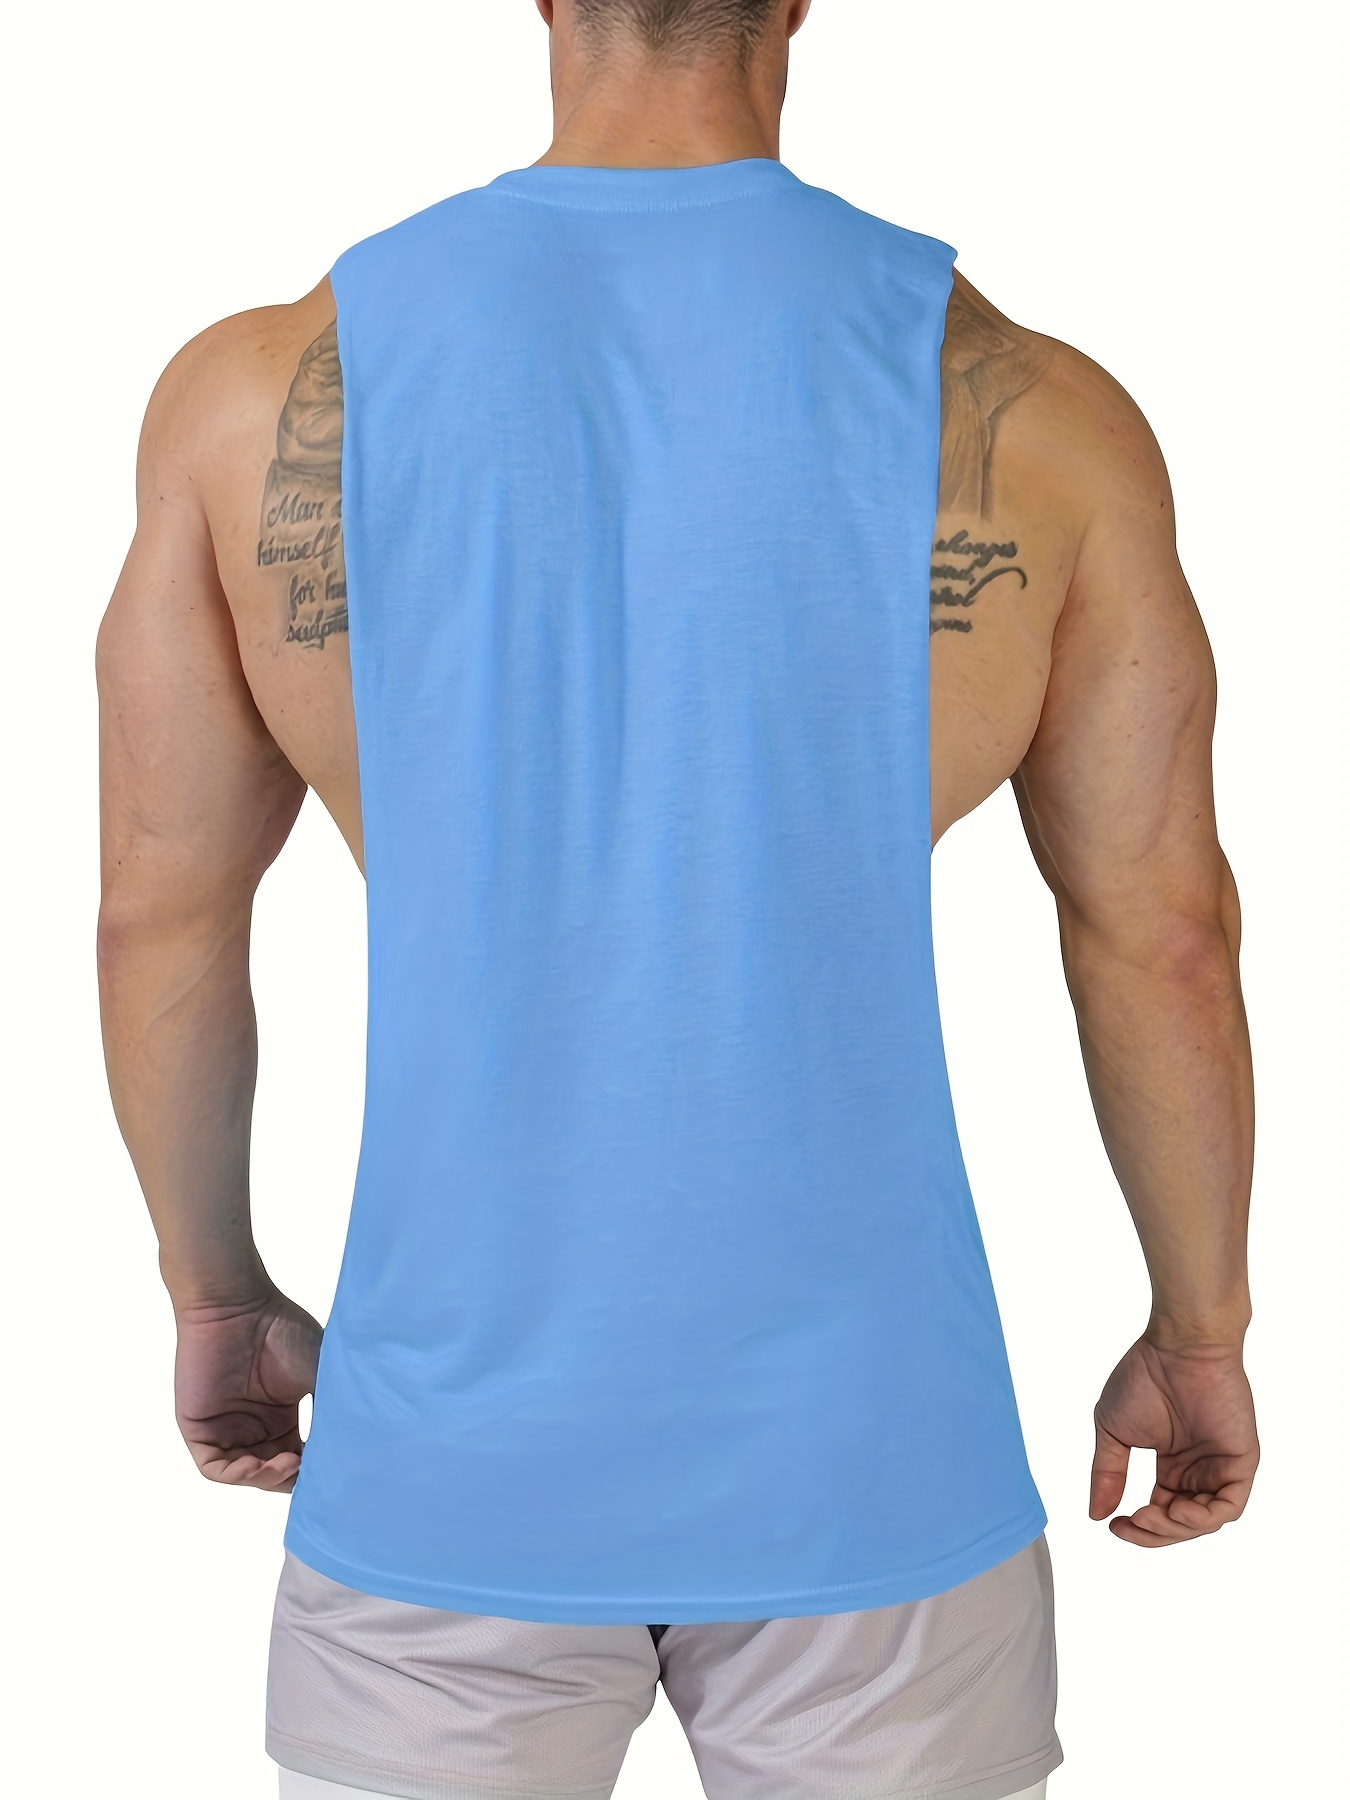 Men's Regular Basic Loose Tank Top, Casual Comfy Vest For Summer, Men's  Clothing Top For Gym Fitness Workout